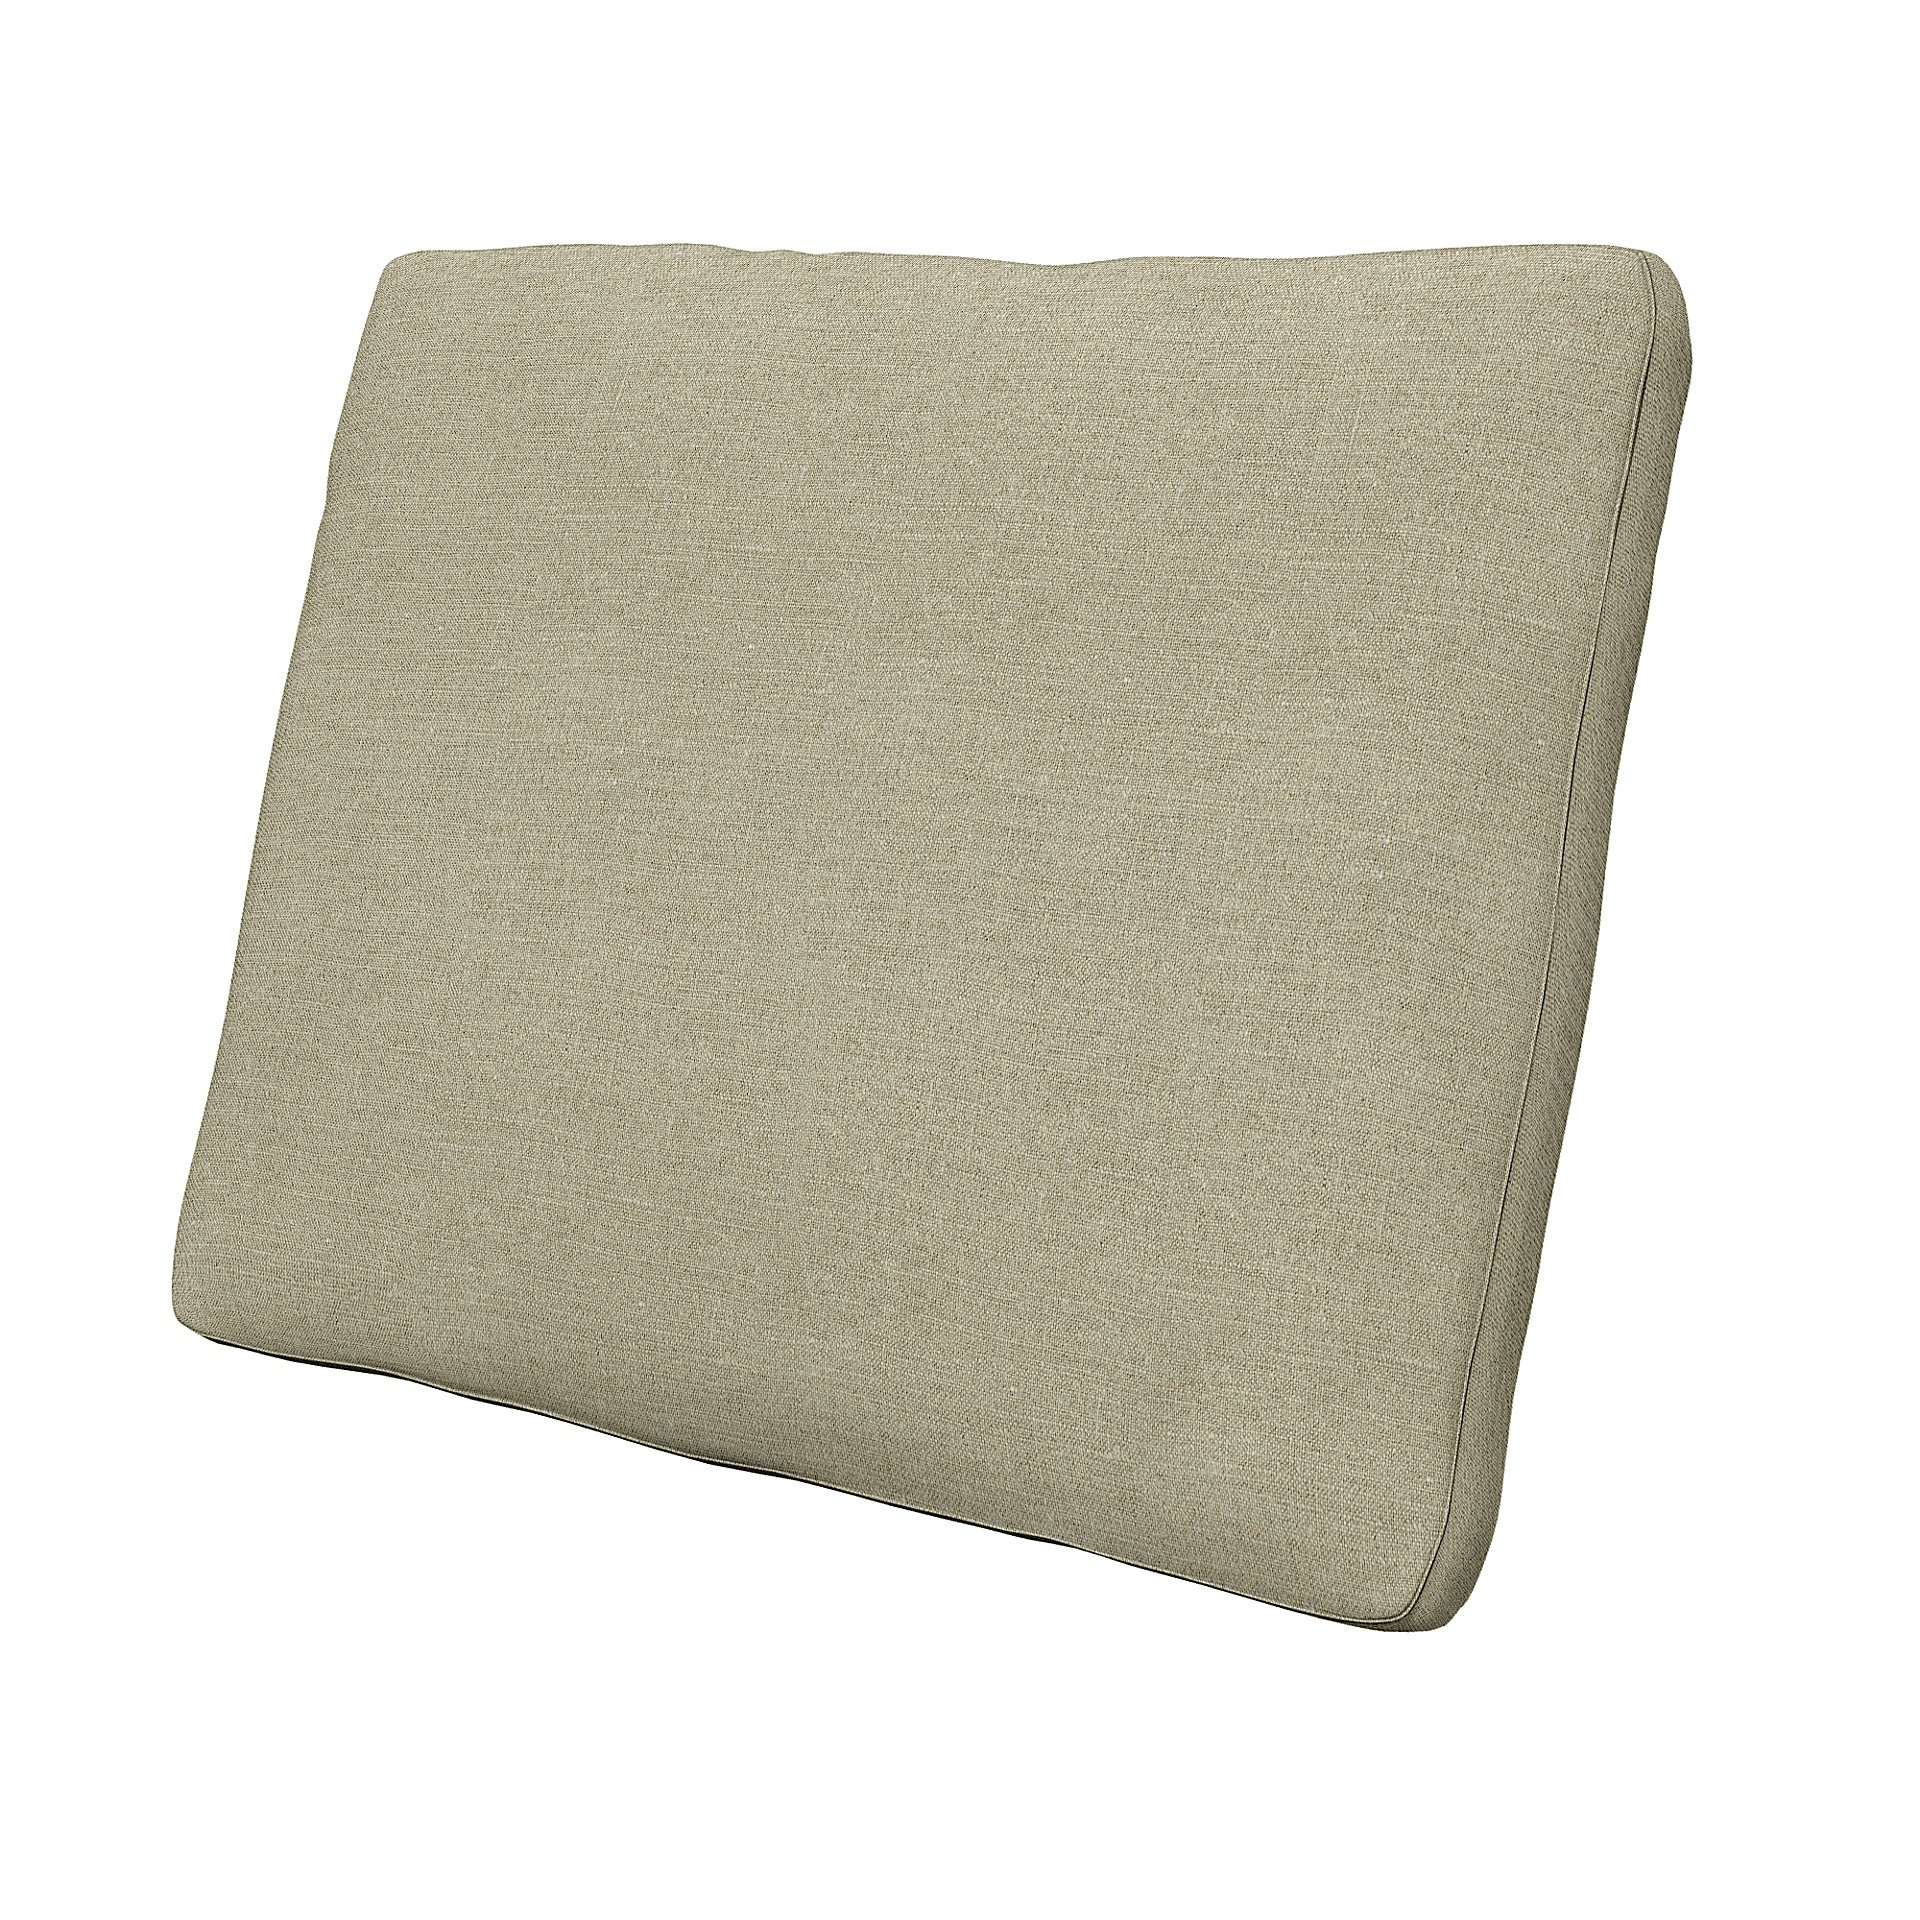 IKEA - Cushion Cover Karlstad 58x48x5 cm, Pebble, Linen - Bemz